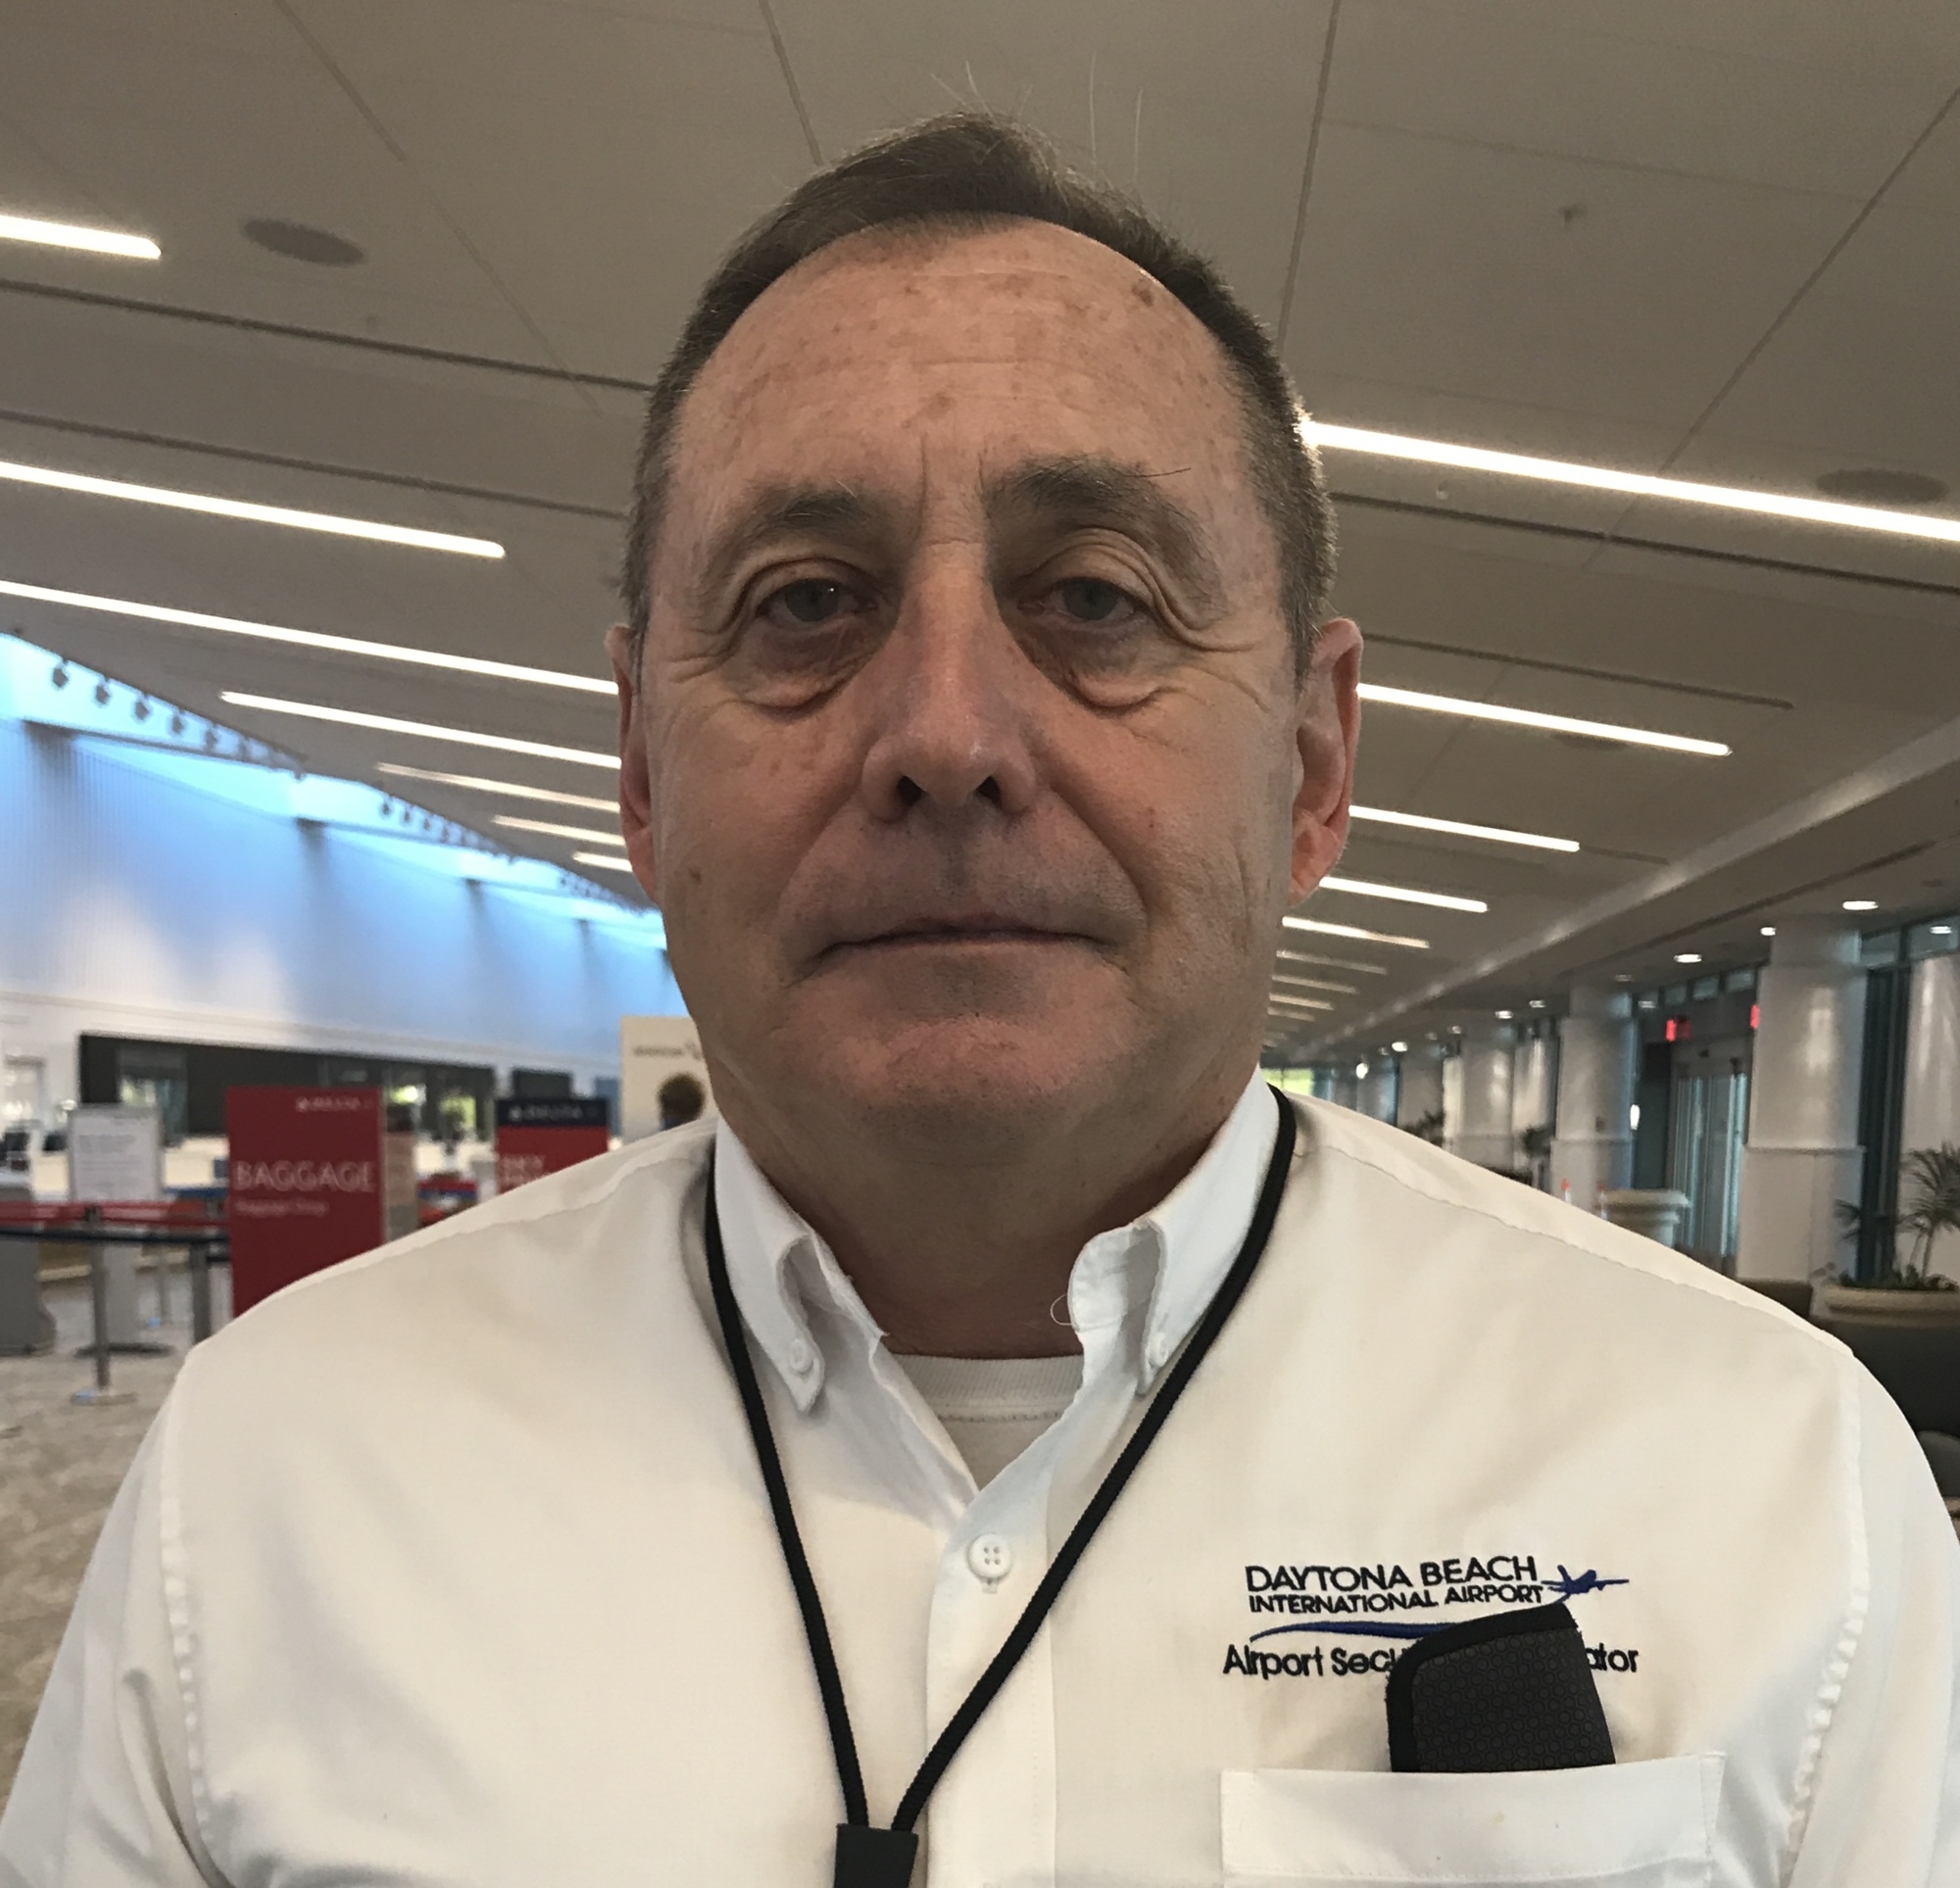 Airport Security Coordinator Ricky Burts. Courtesy photo